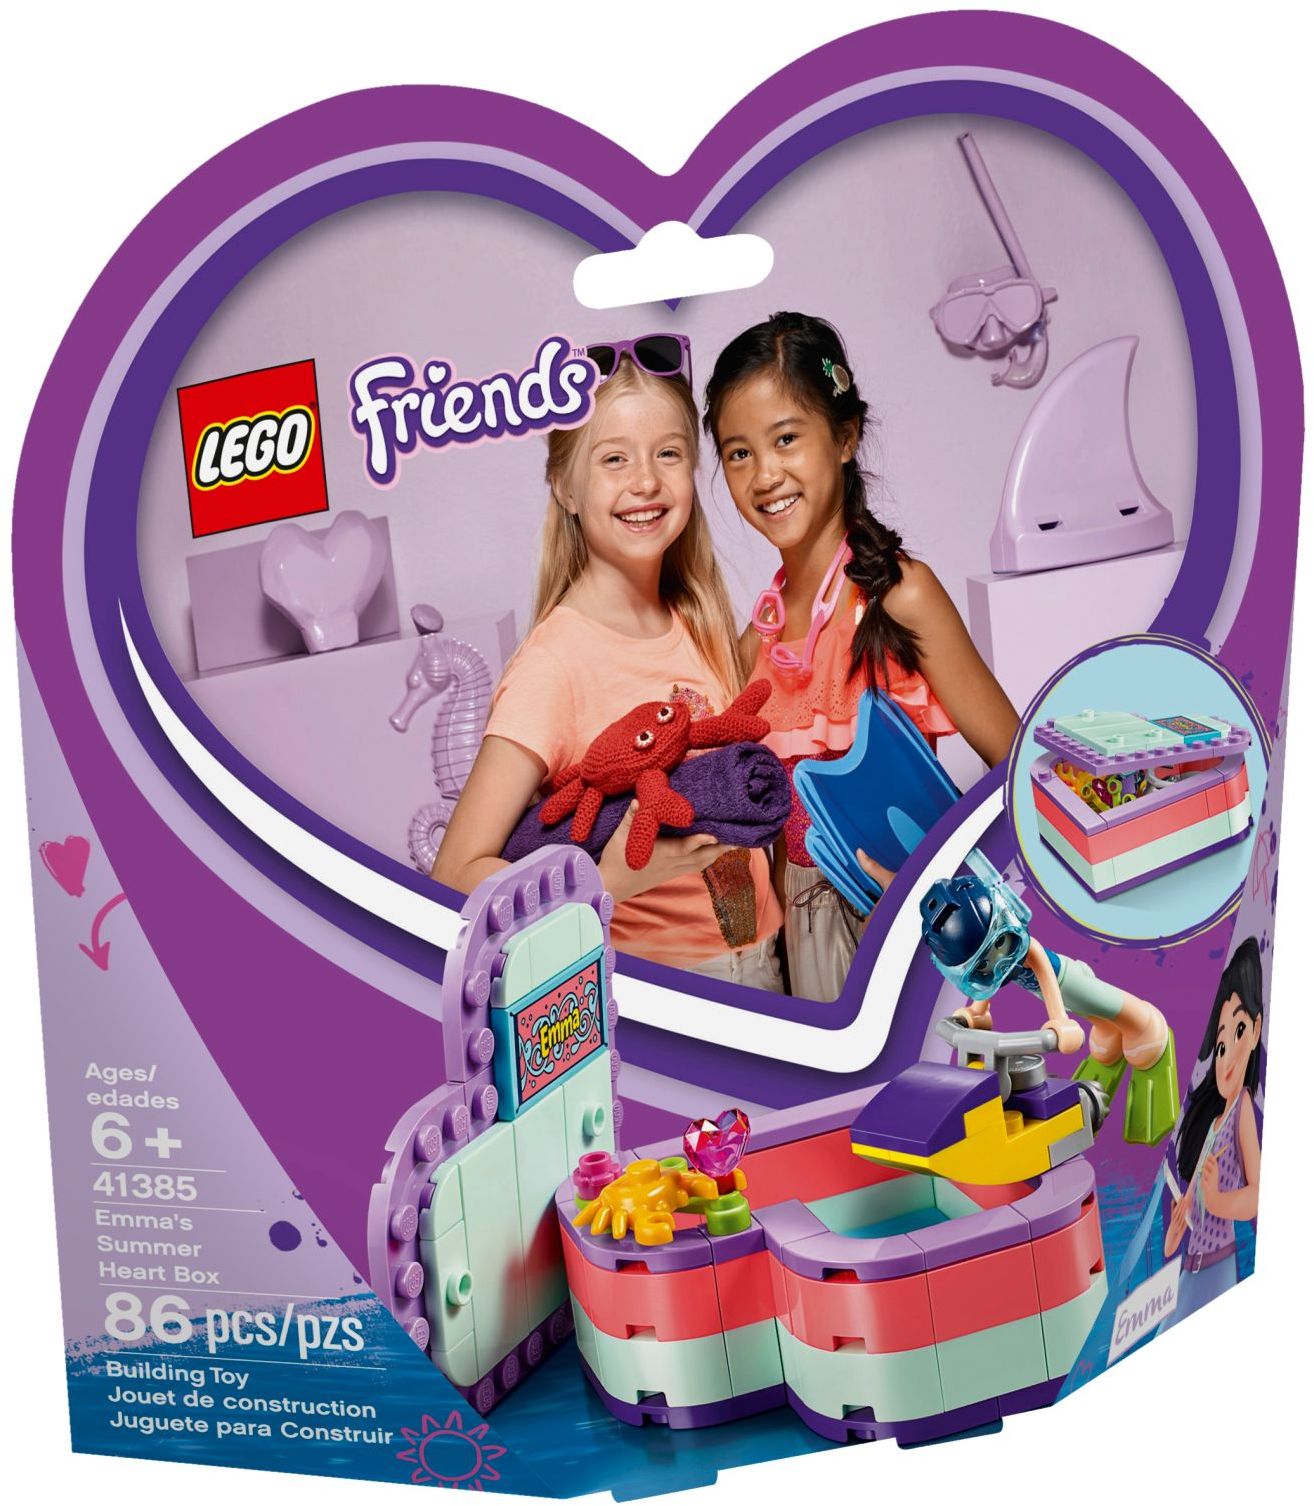 41385 LEGO Friends Emma's Summer Heart Box - Hộp trái tim mùa hè của Emma